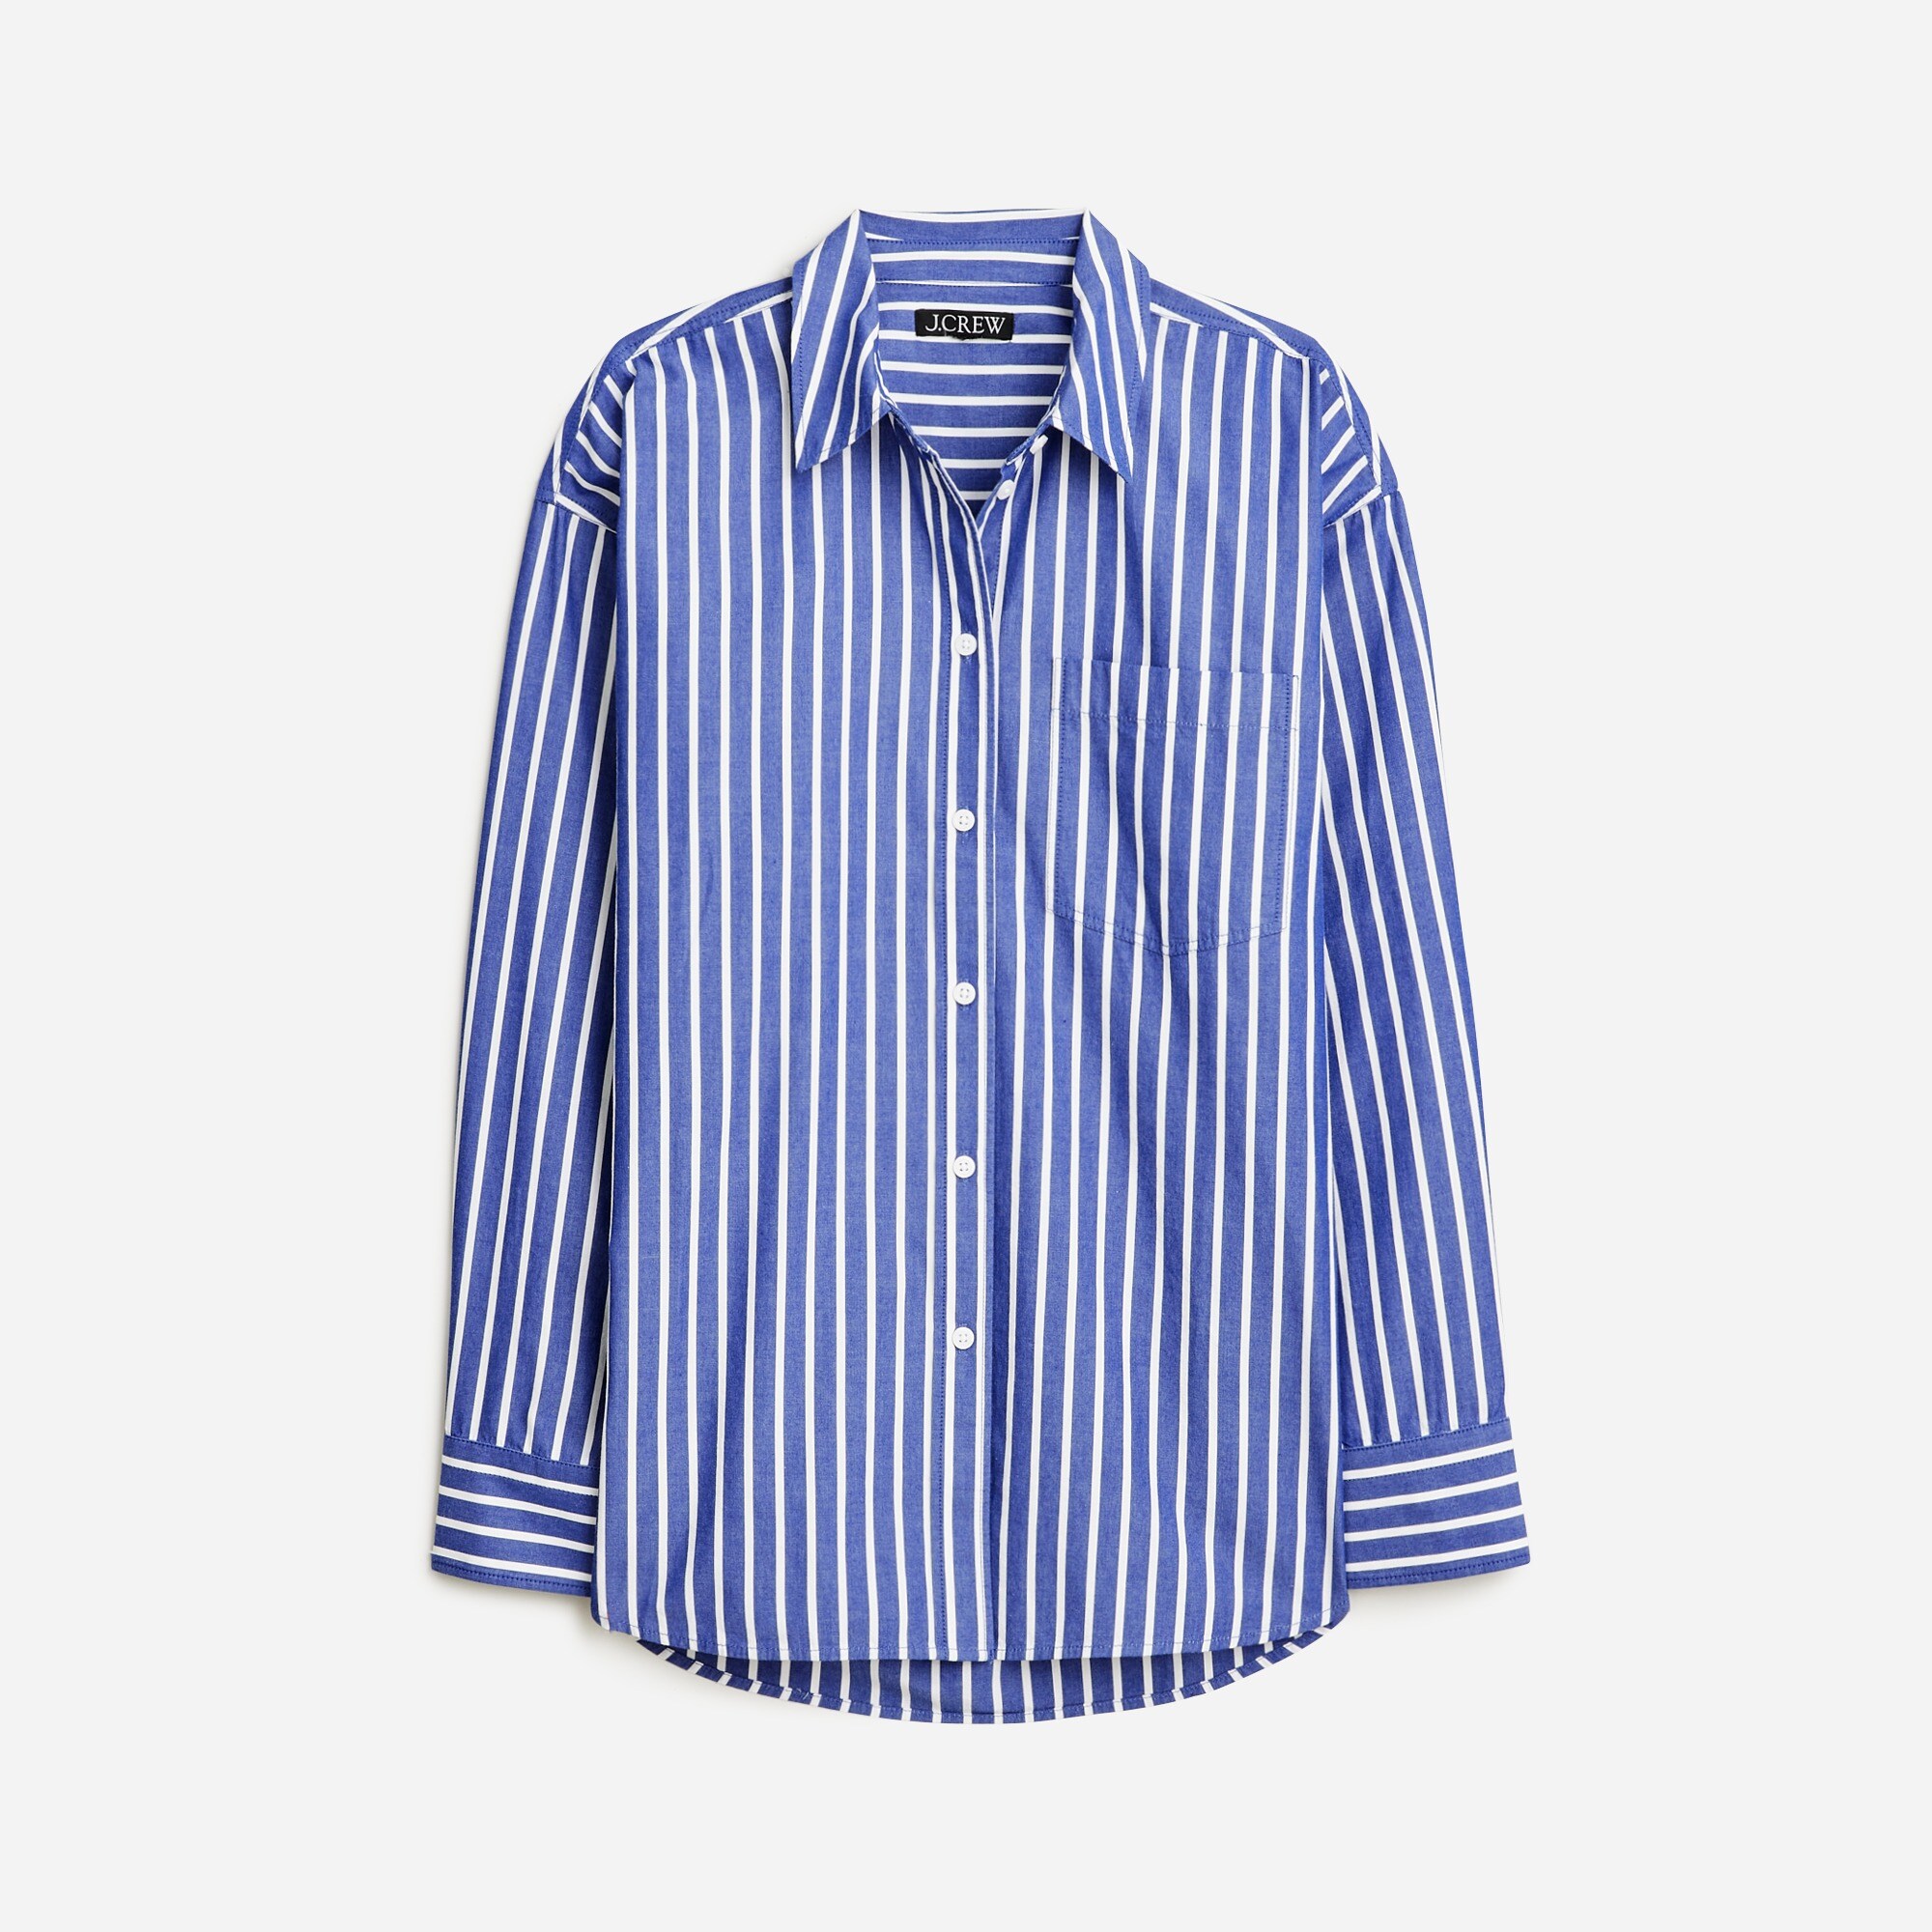  Petite &Eacute;tienne oversized shirt in striped lightweight oxford